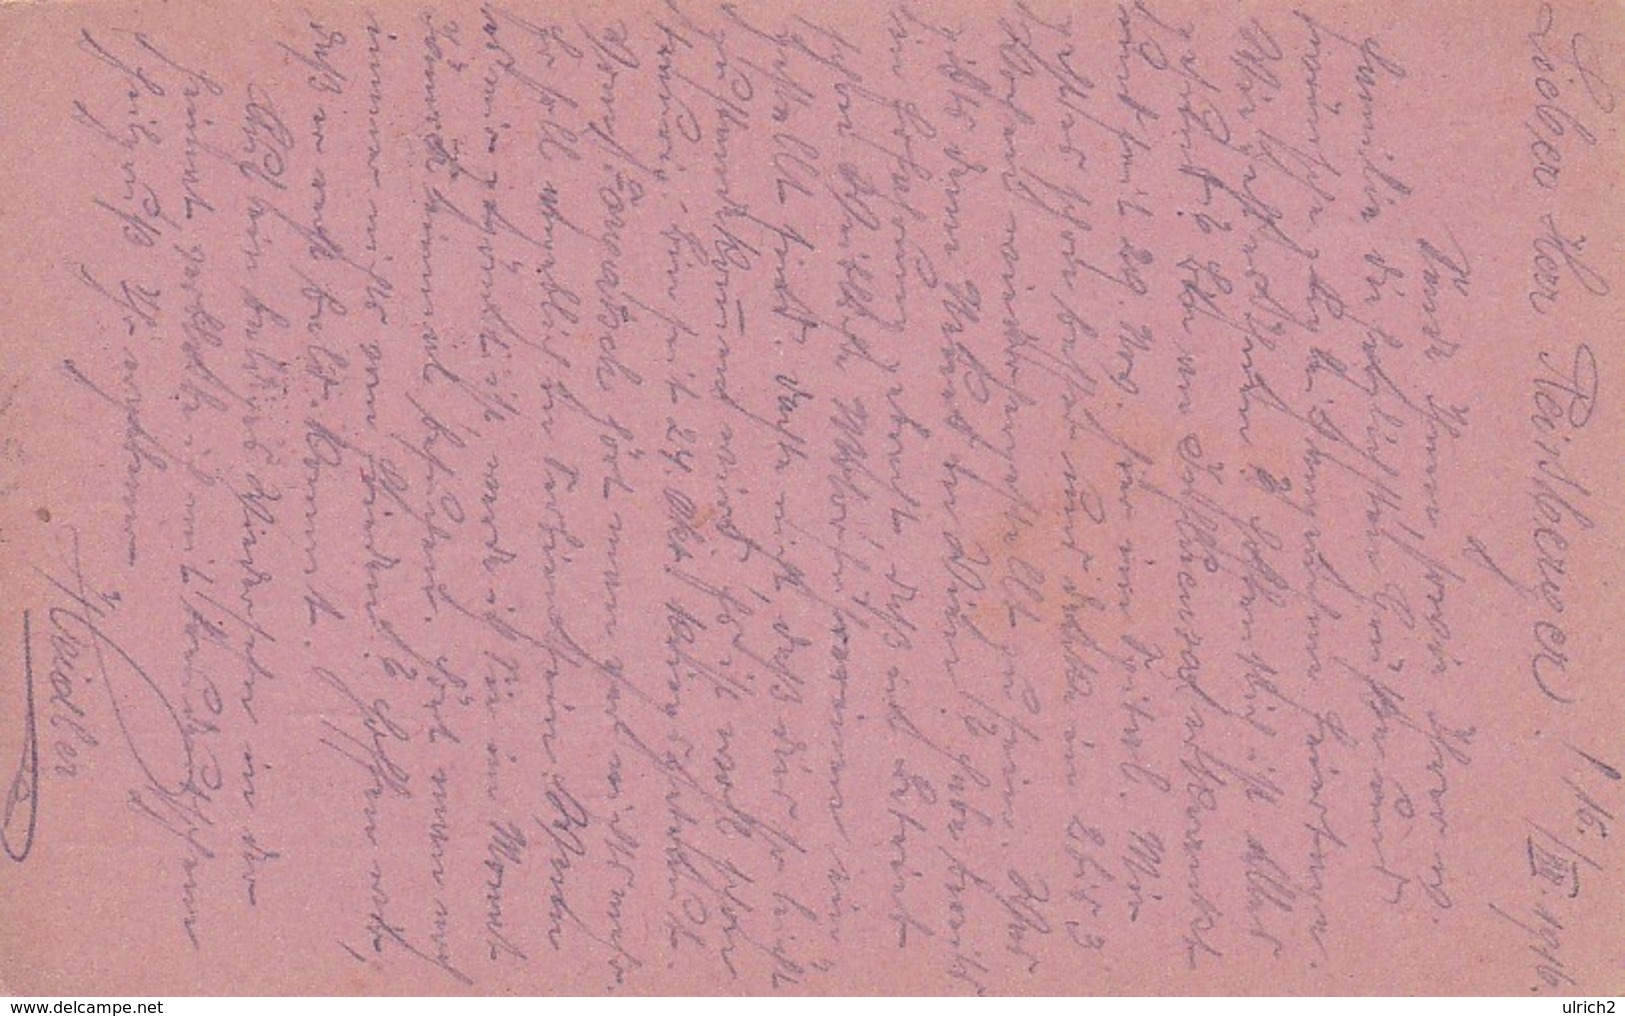 Feldpostkorrespondenzkarte - Vöröskereszt Kisegitö Korhaz - Rotes Kreuz Spital - 1916 (34582) - Briefe U. Dokumente